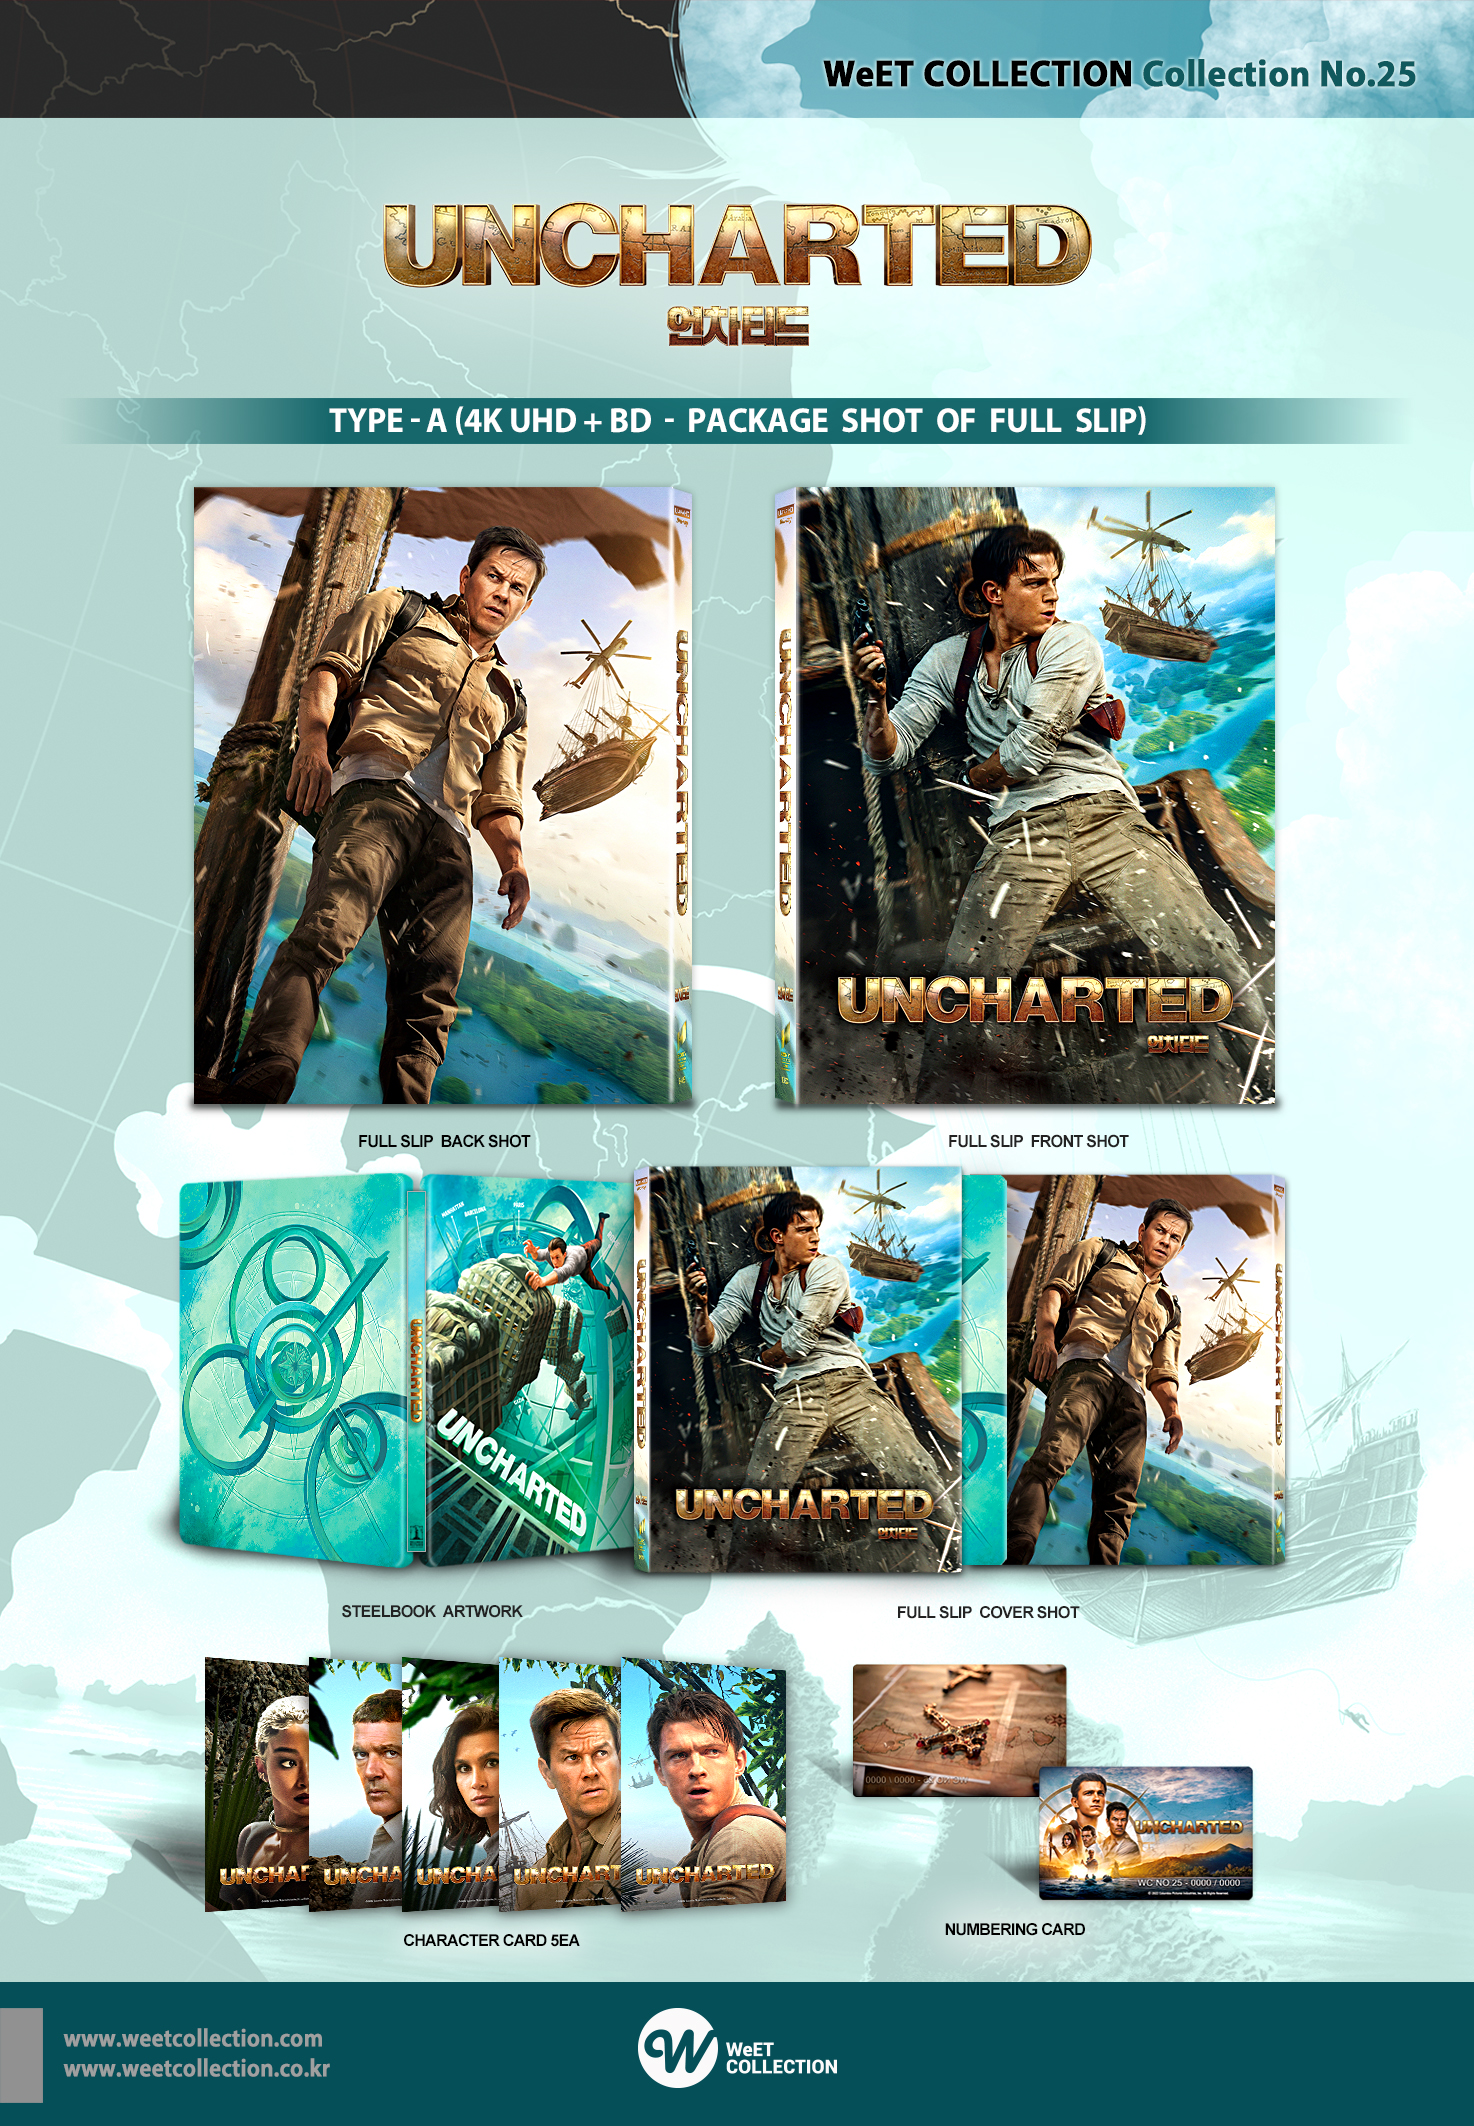 Blu-ray] Uncharted Fullslip 4K(2Disc: 4K UHD + BD) Steelbook LE